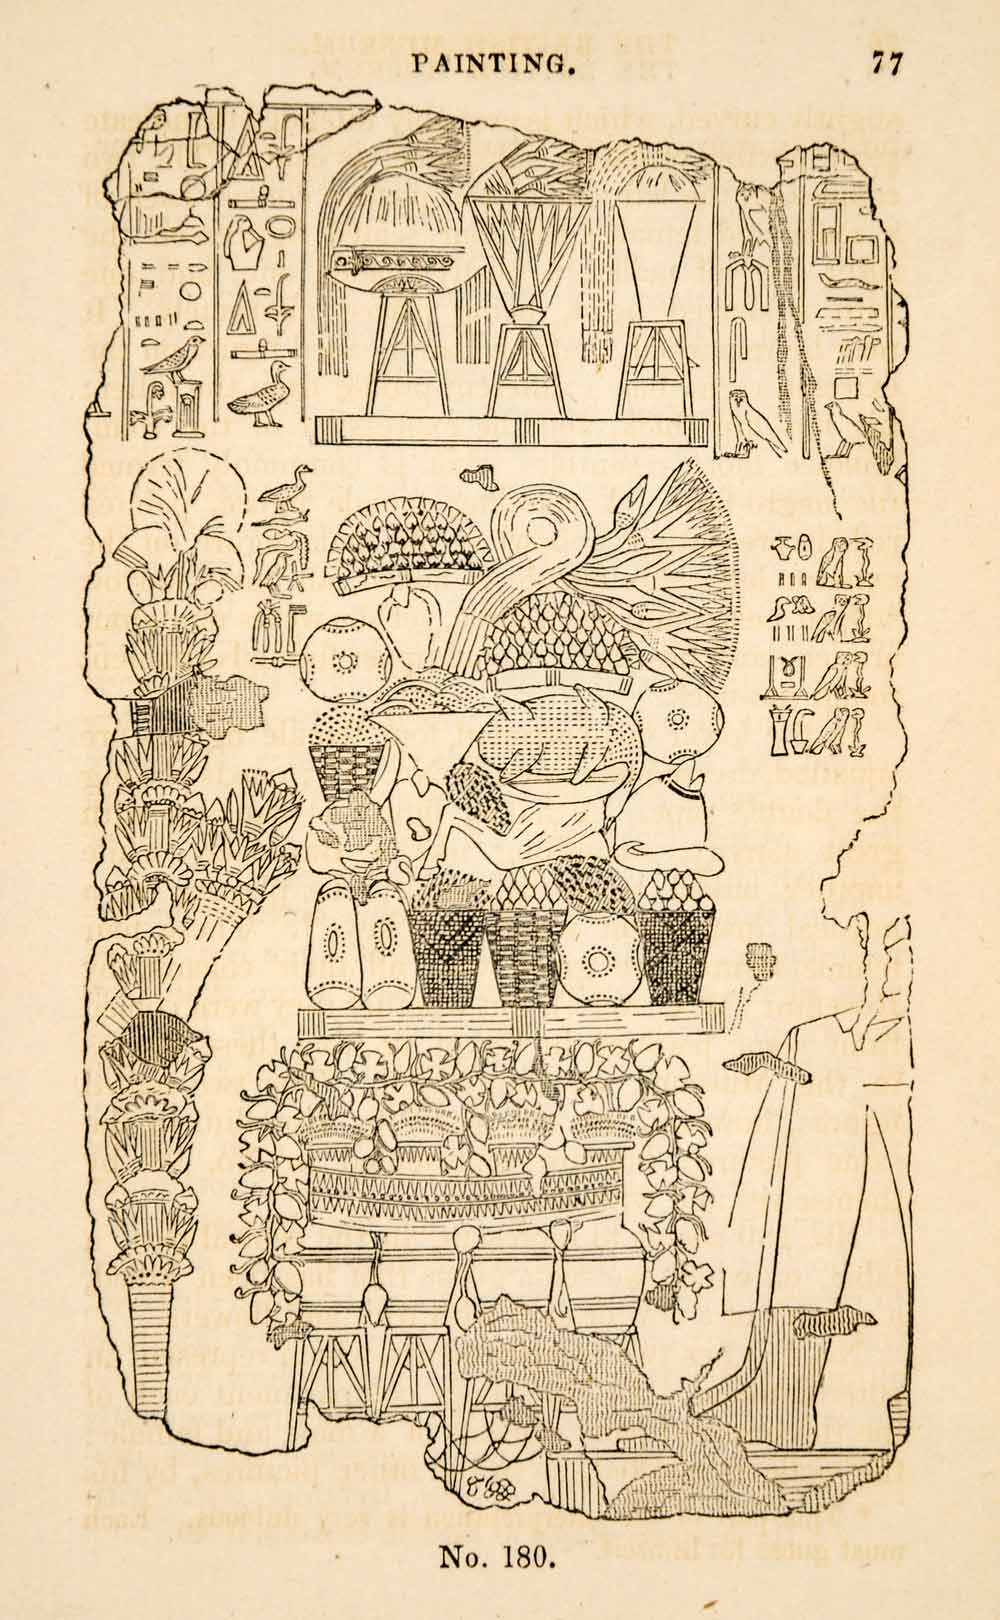 1836 Wood Engraving Egyptian Celebration Feast Buffet Hieroglyphics Duck XGAA9